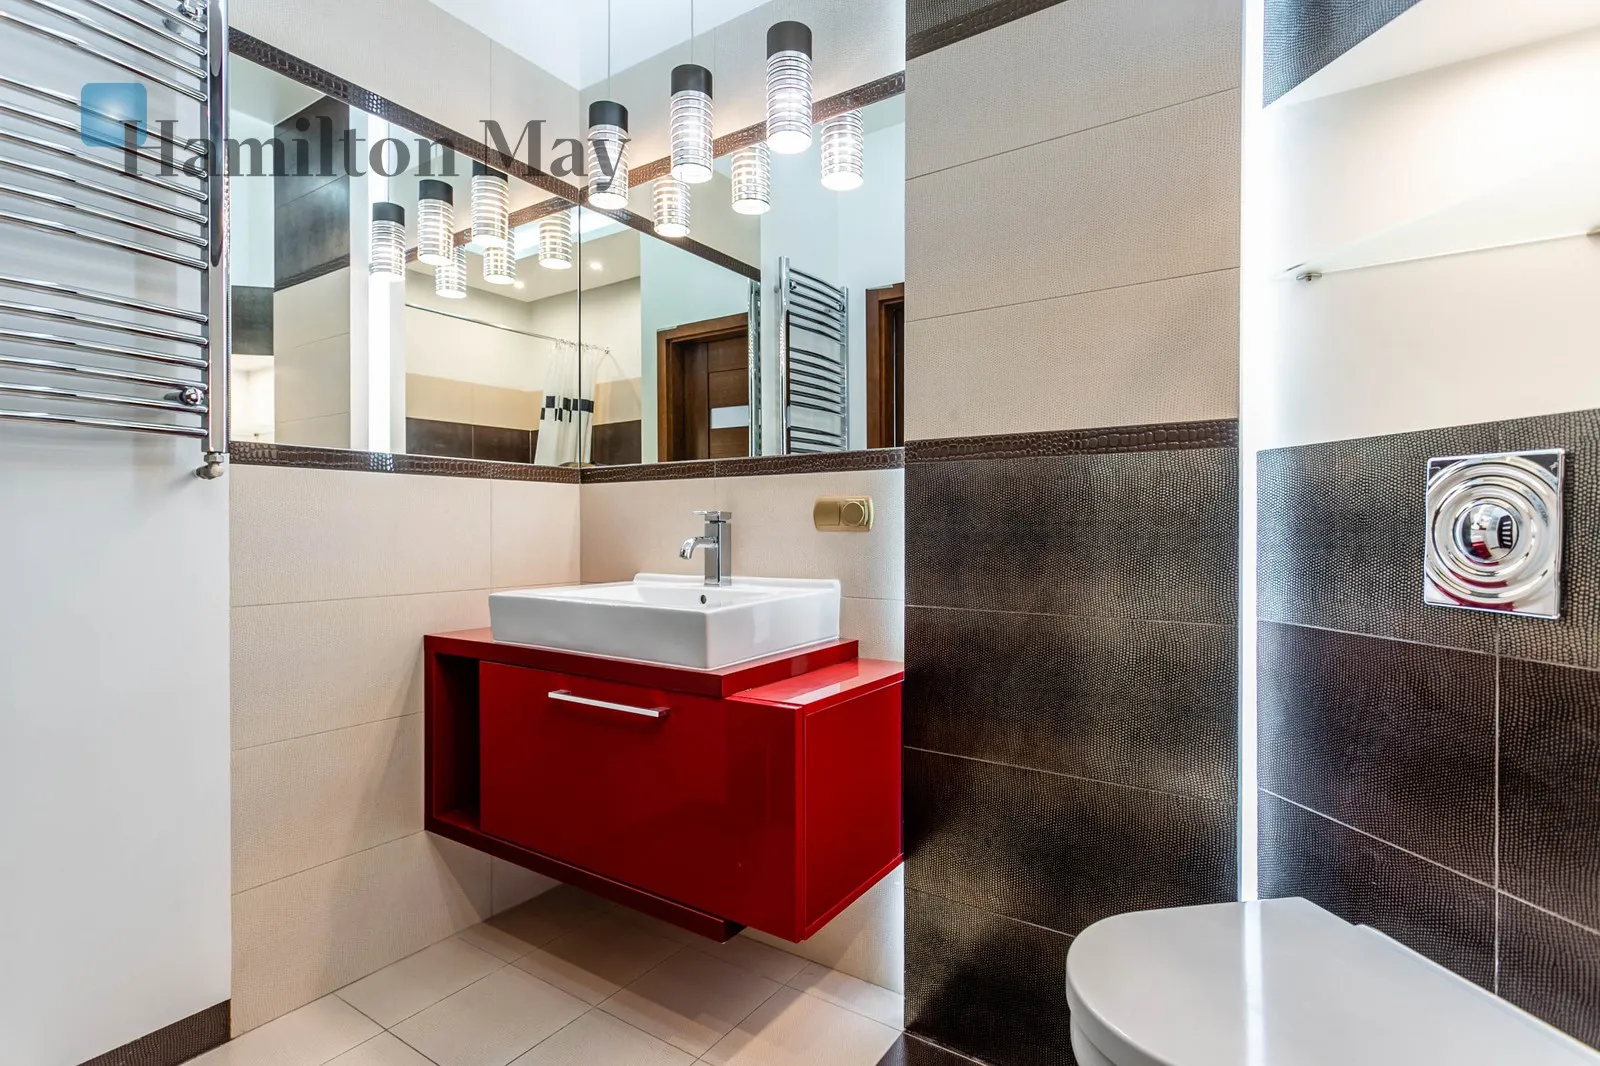 Level: 5 Price: 5000 PLN Bedrooms: 1 Bathrooms: 1 - slider